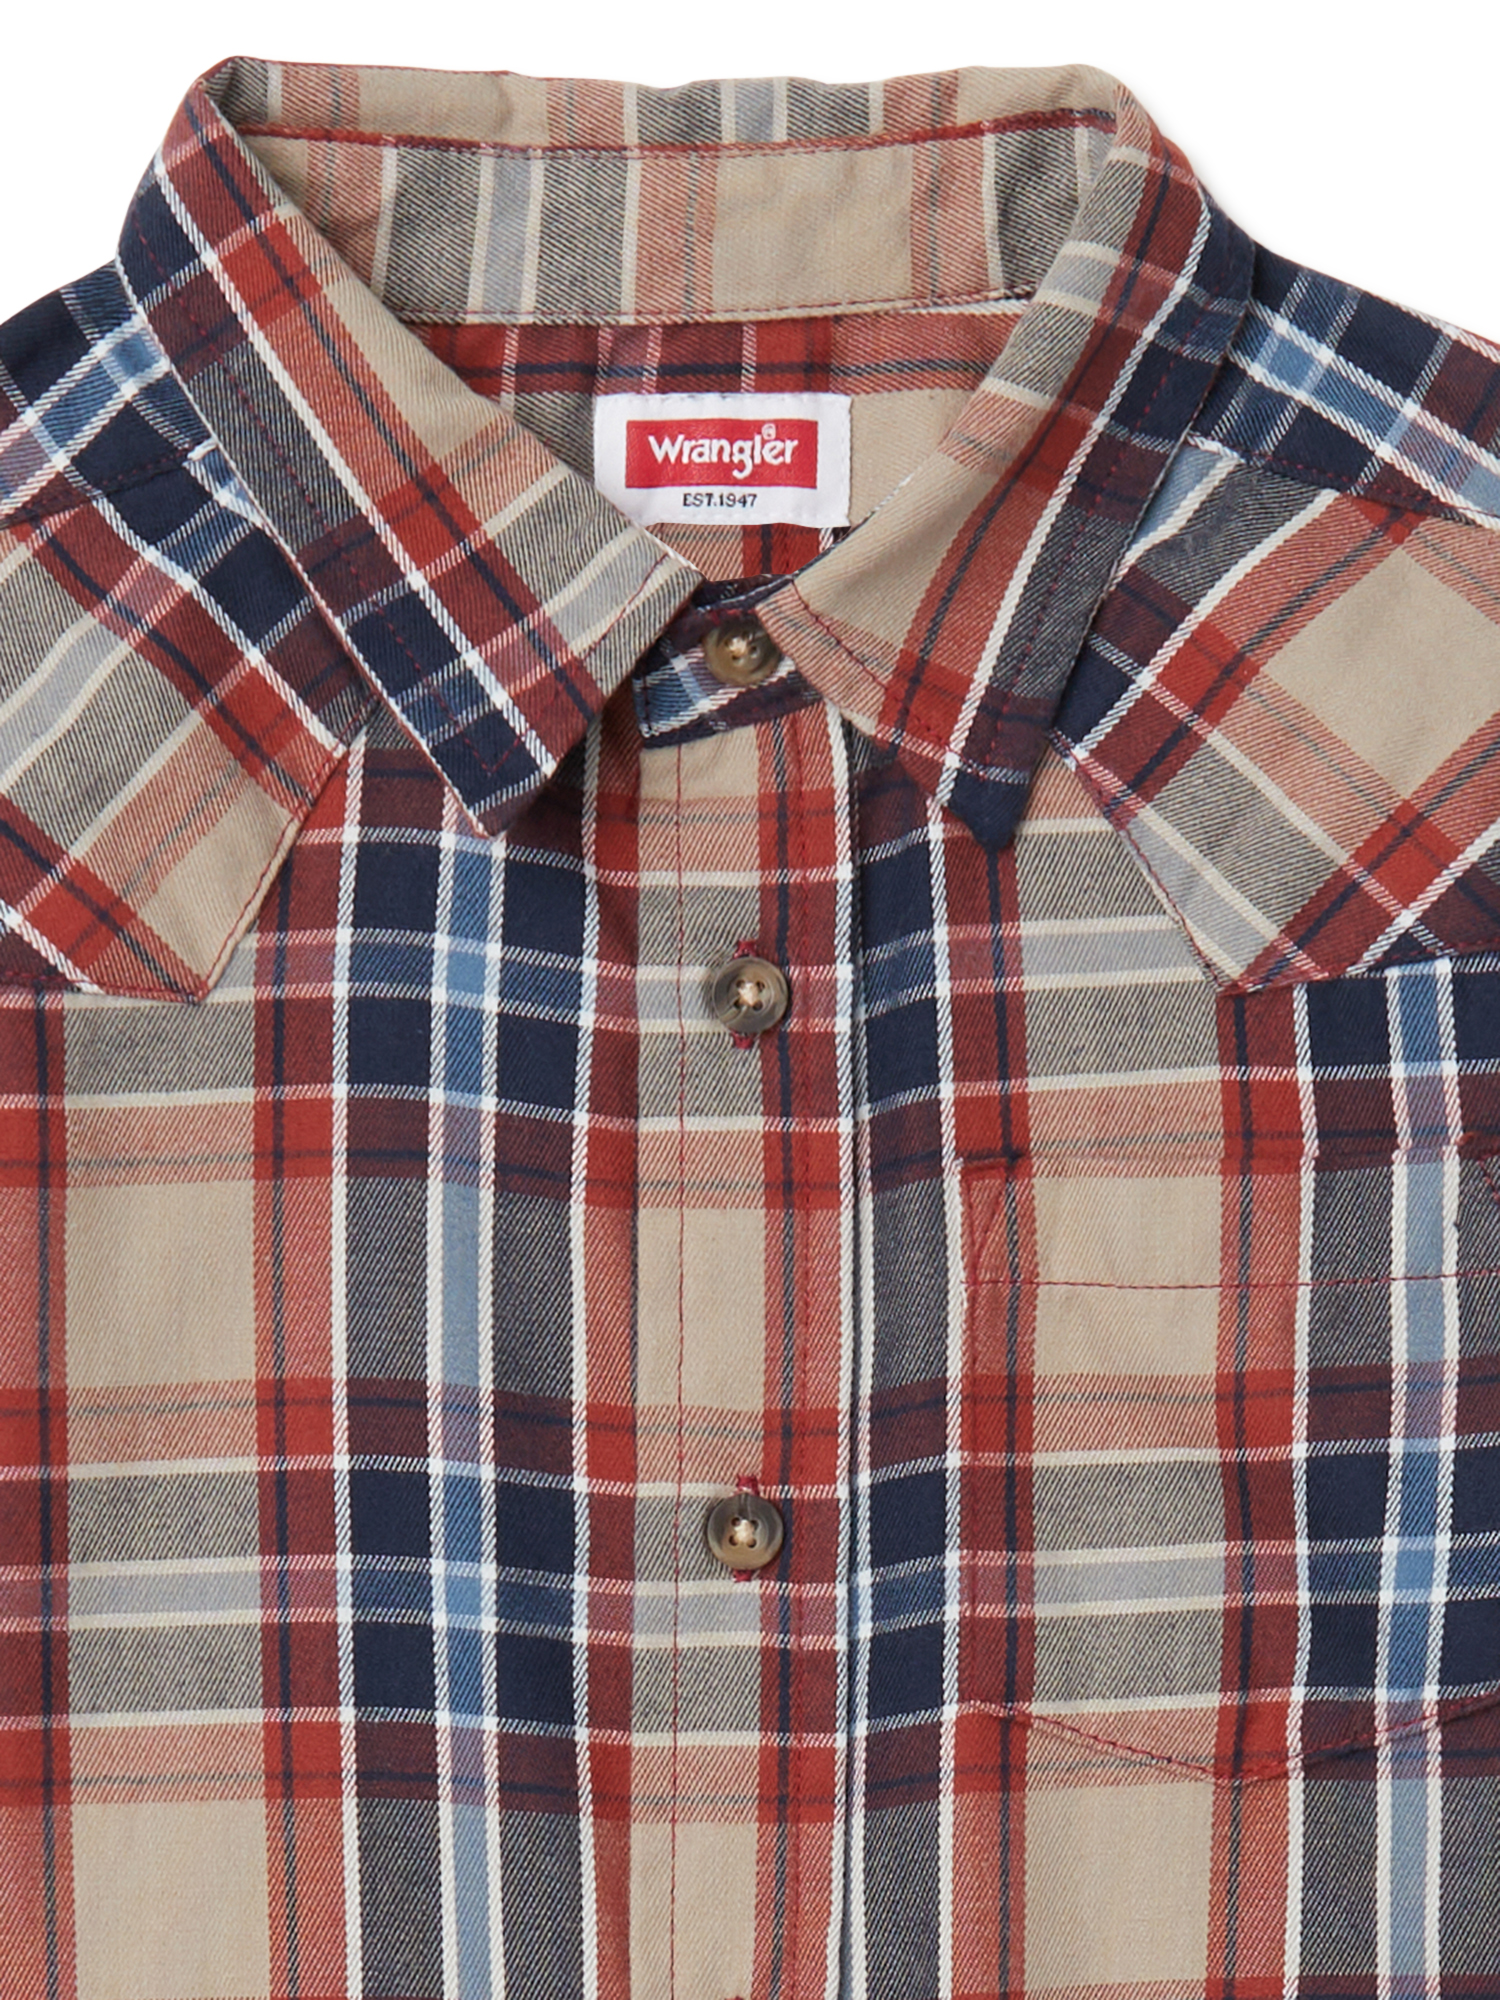 Wrangler Boys Long Sleeve Button-Up Shirt, Sizes 4-18 & Husky - image 2 of 3